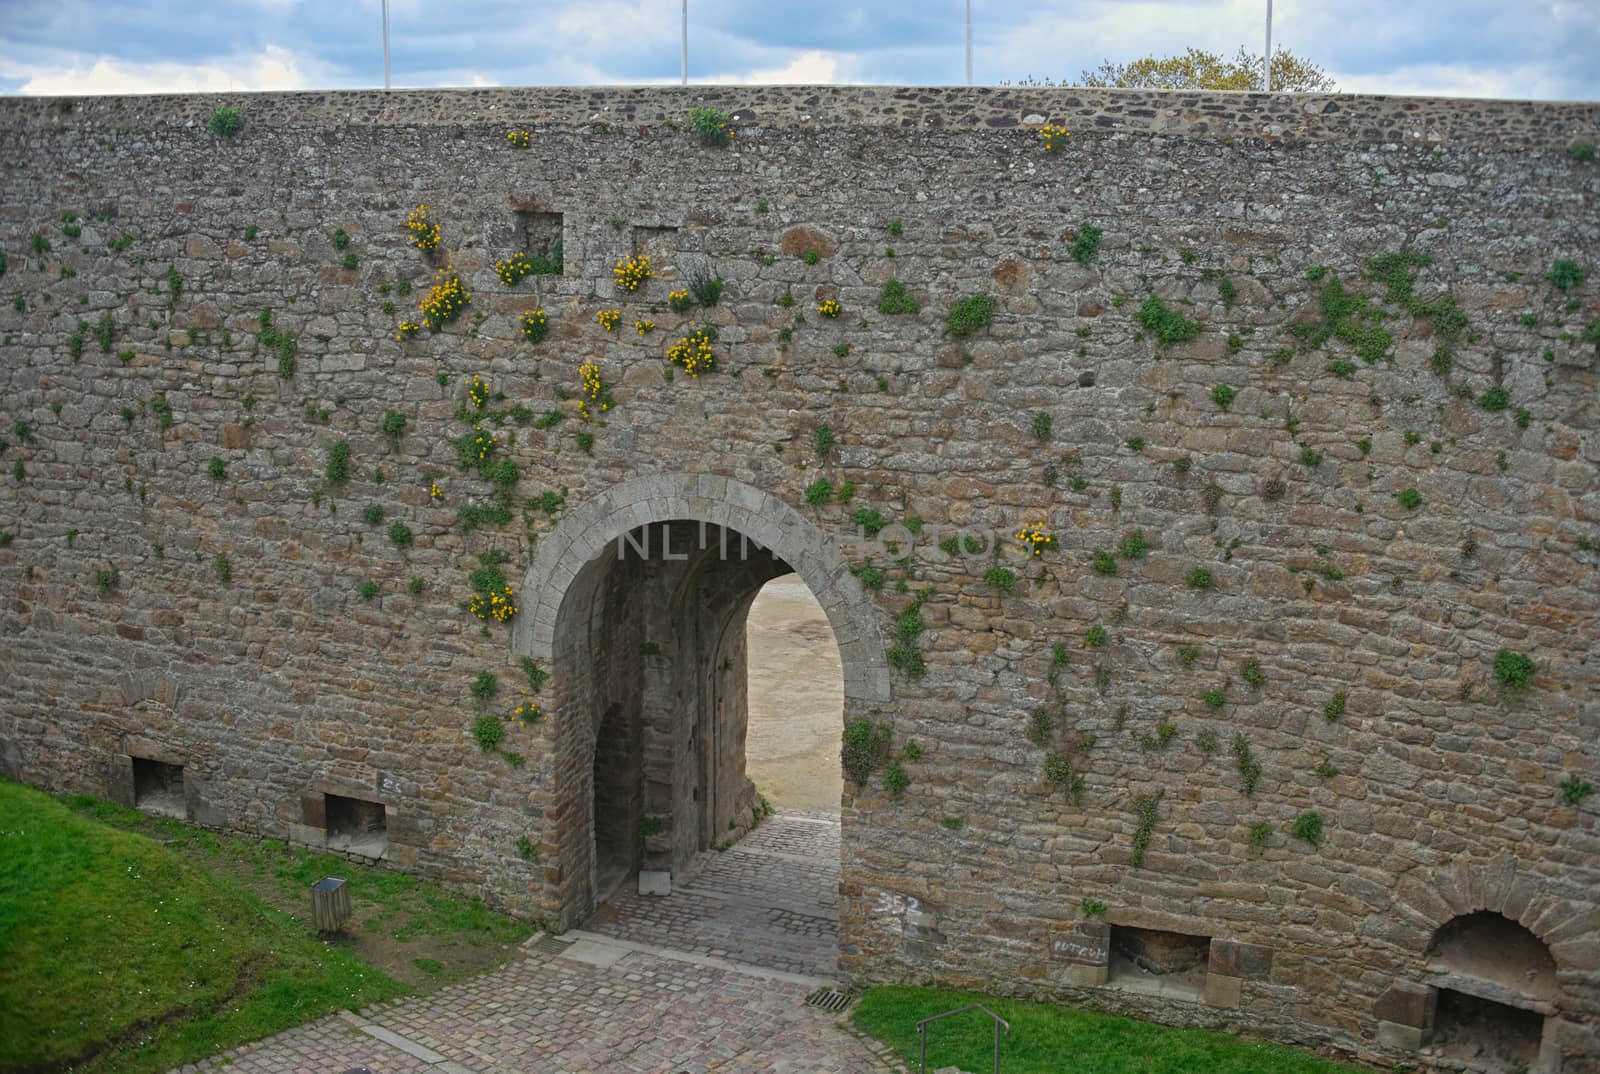 Big stone walls and gate at Dinan fortress, France by sheriffkule